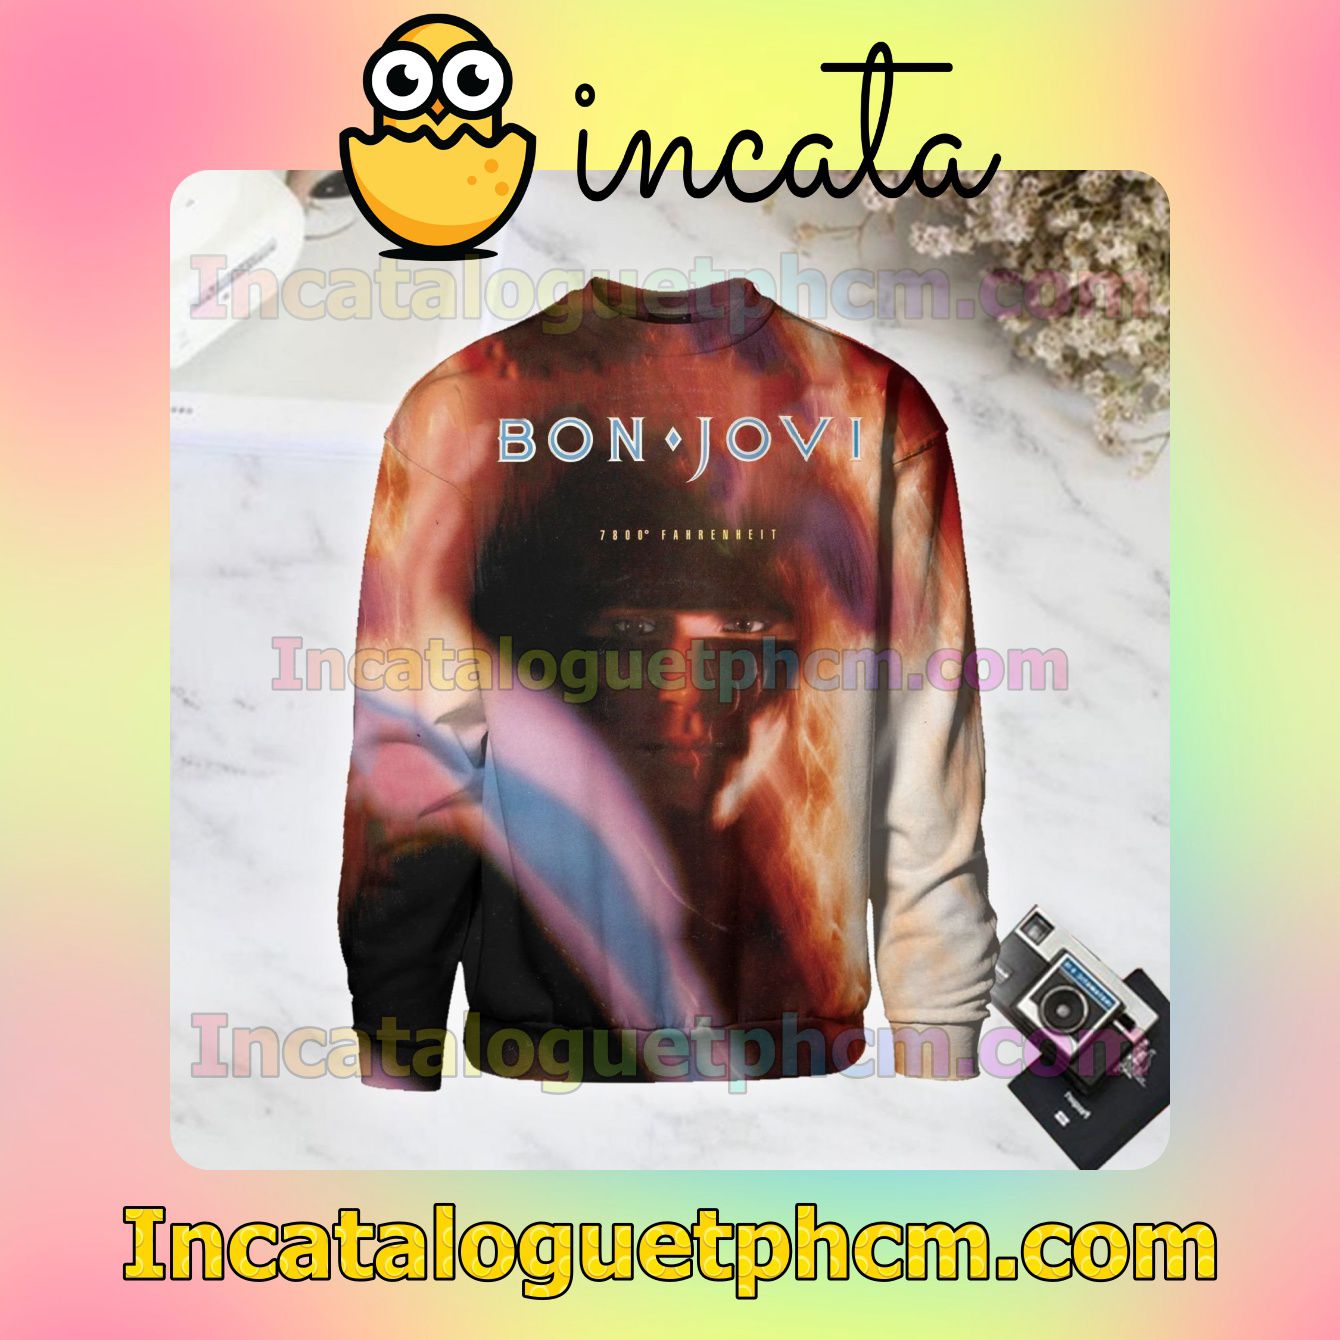 Bon Jovi 7800 Degrees Fahrenheit Album Cover Long Sleeve Shirts For Men